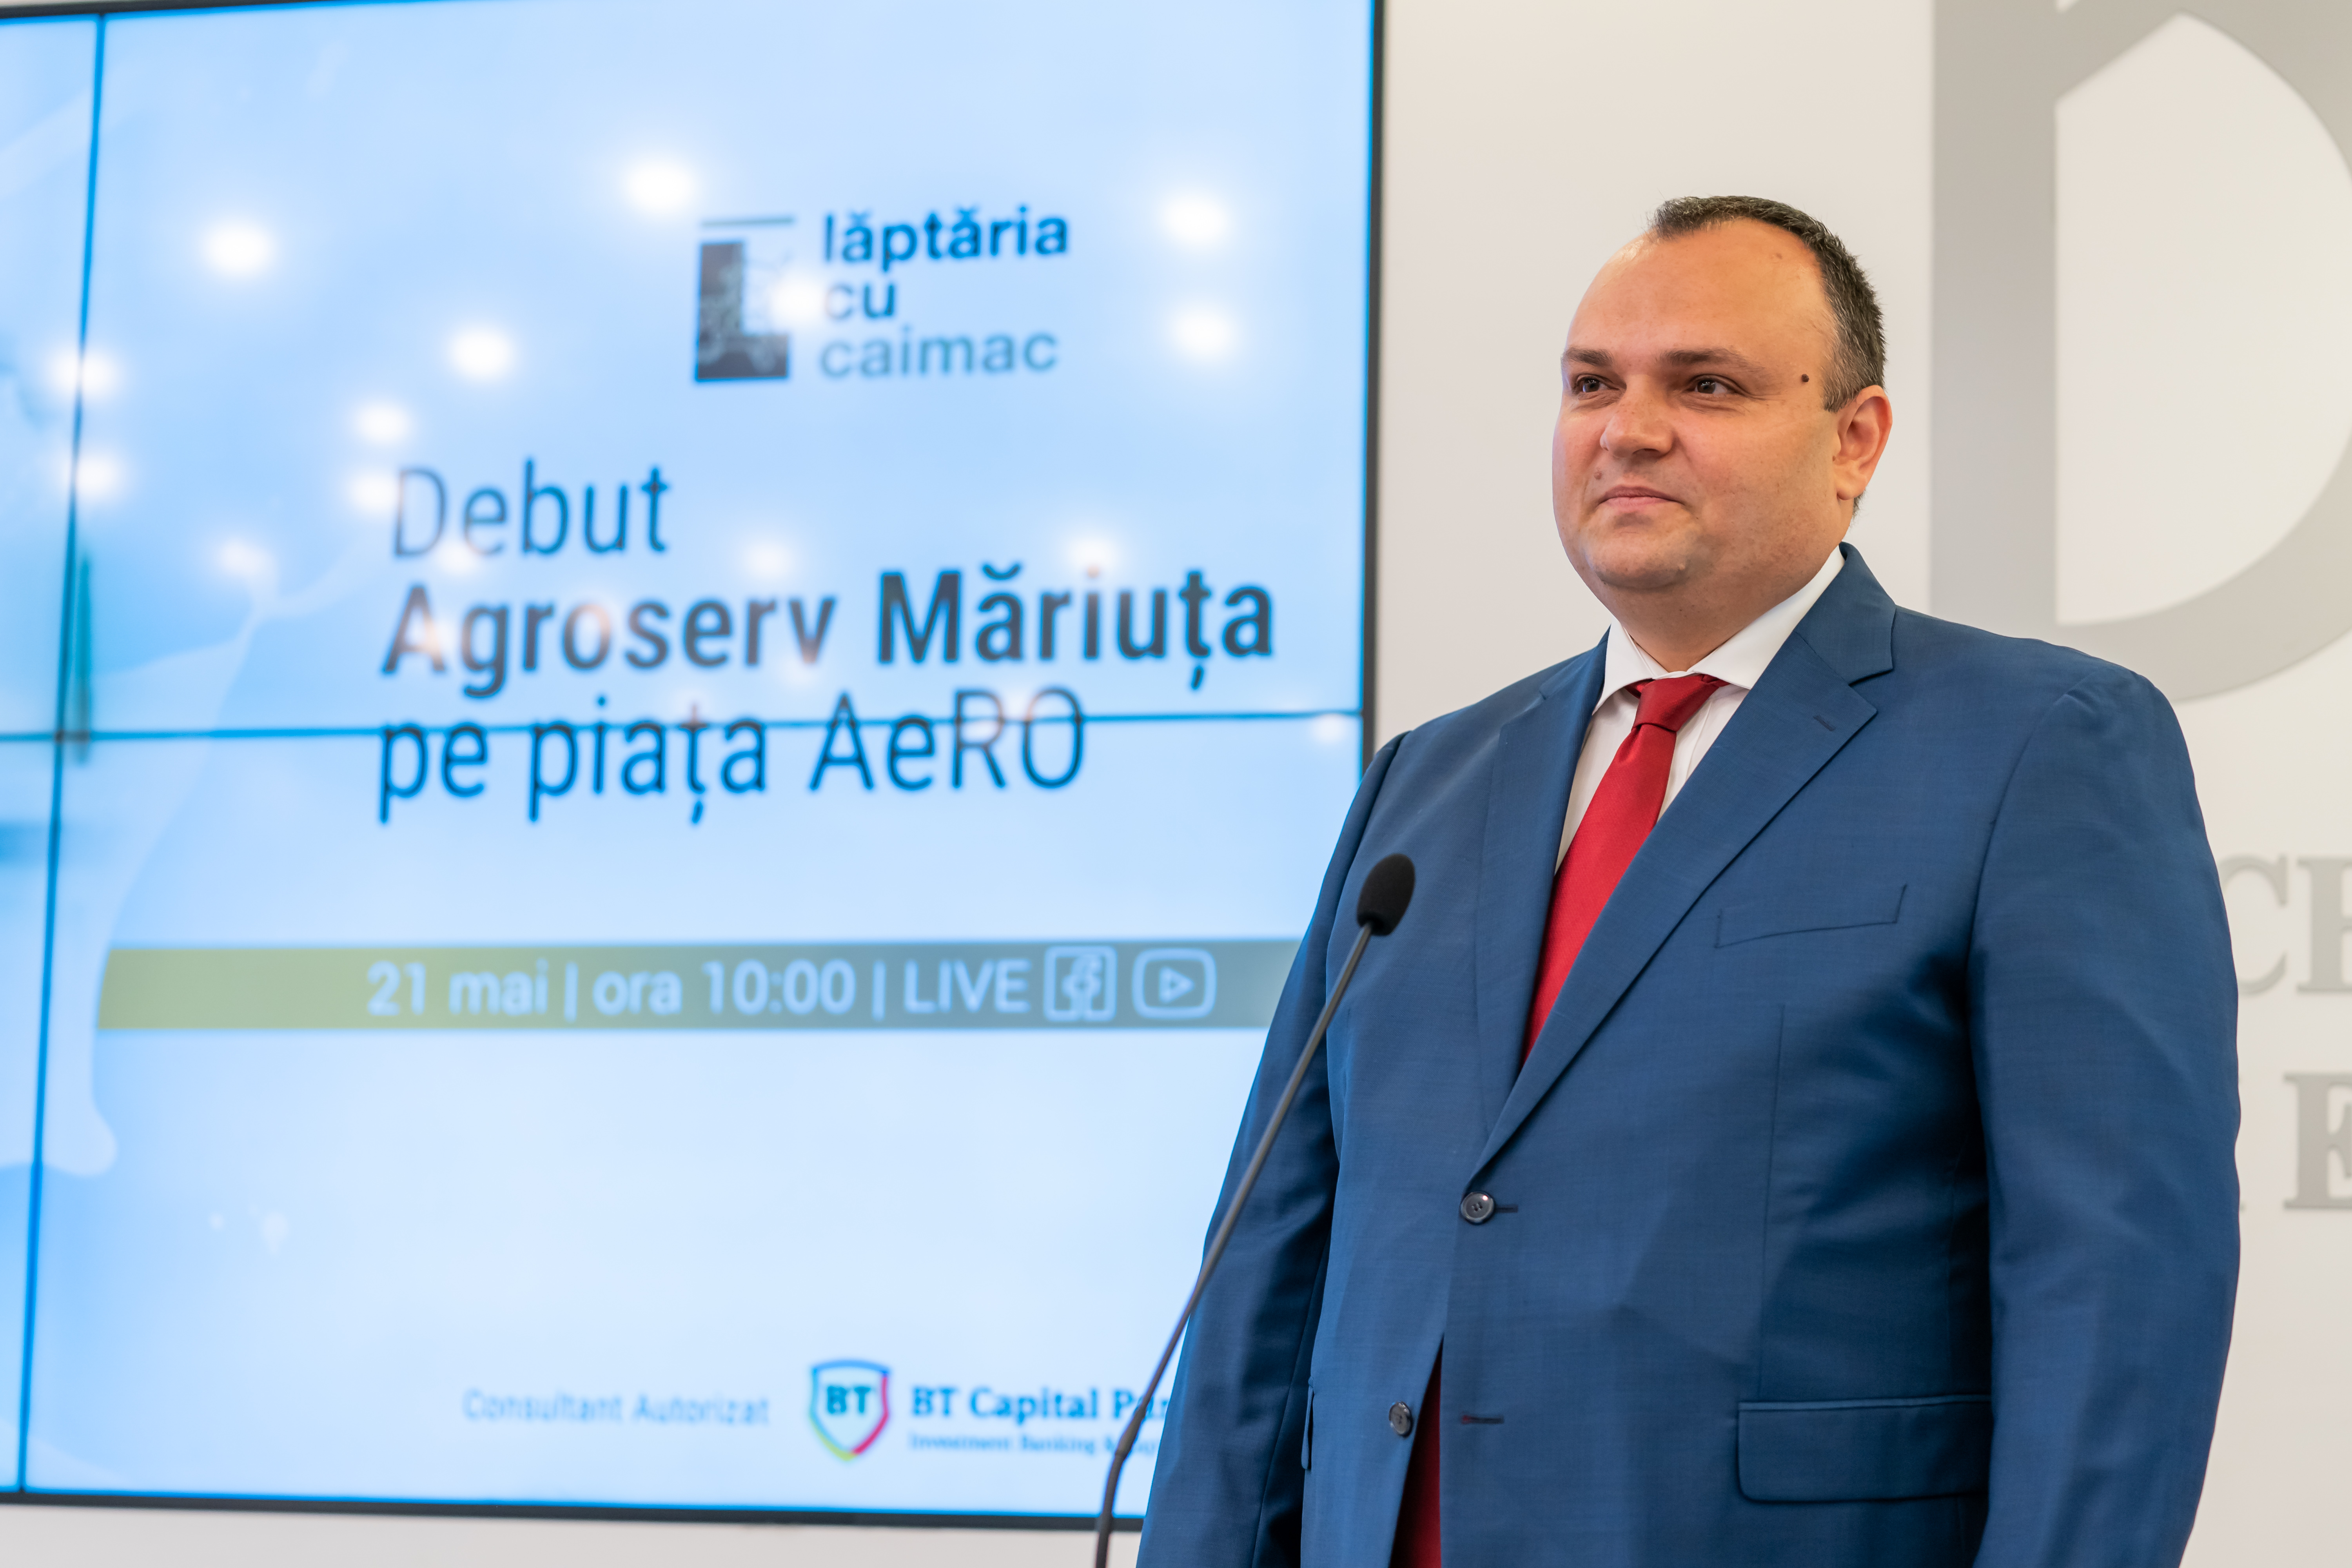 Adrian Cocan CEO Agroserv Mariuta